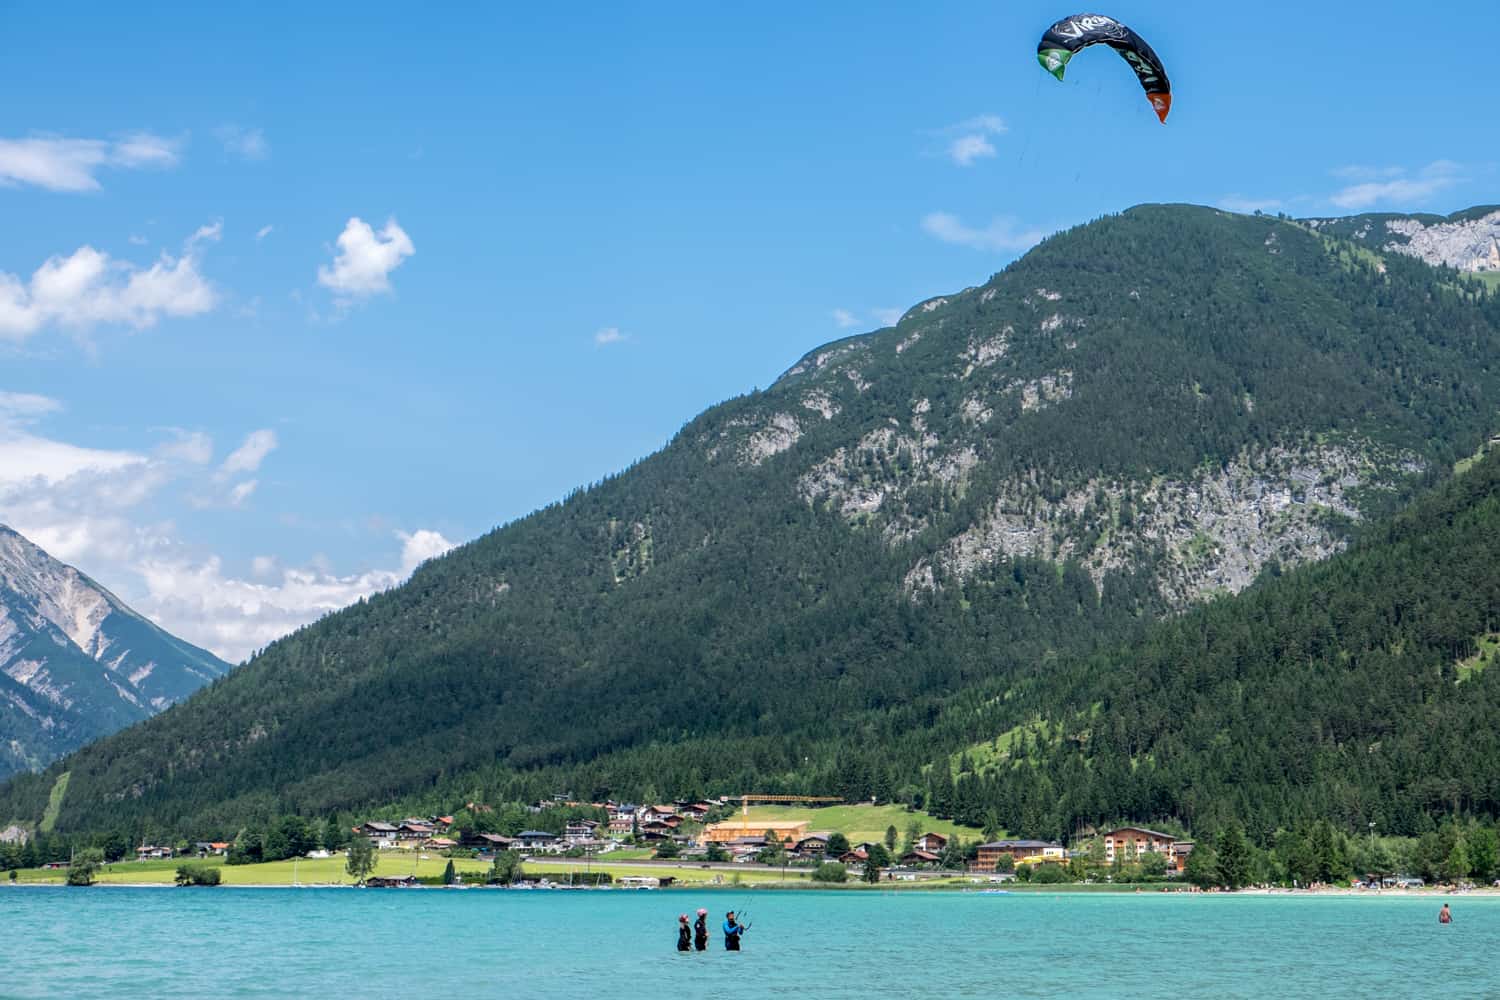 Kitesurfing lessons on Lake Achensee, Tirol, Austria